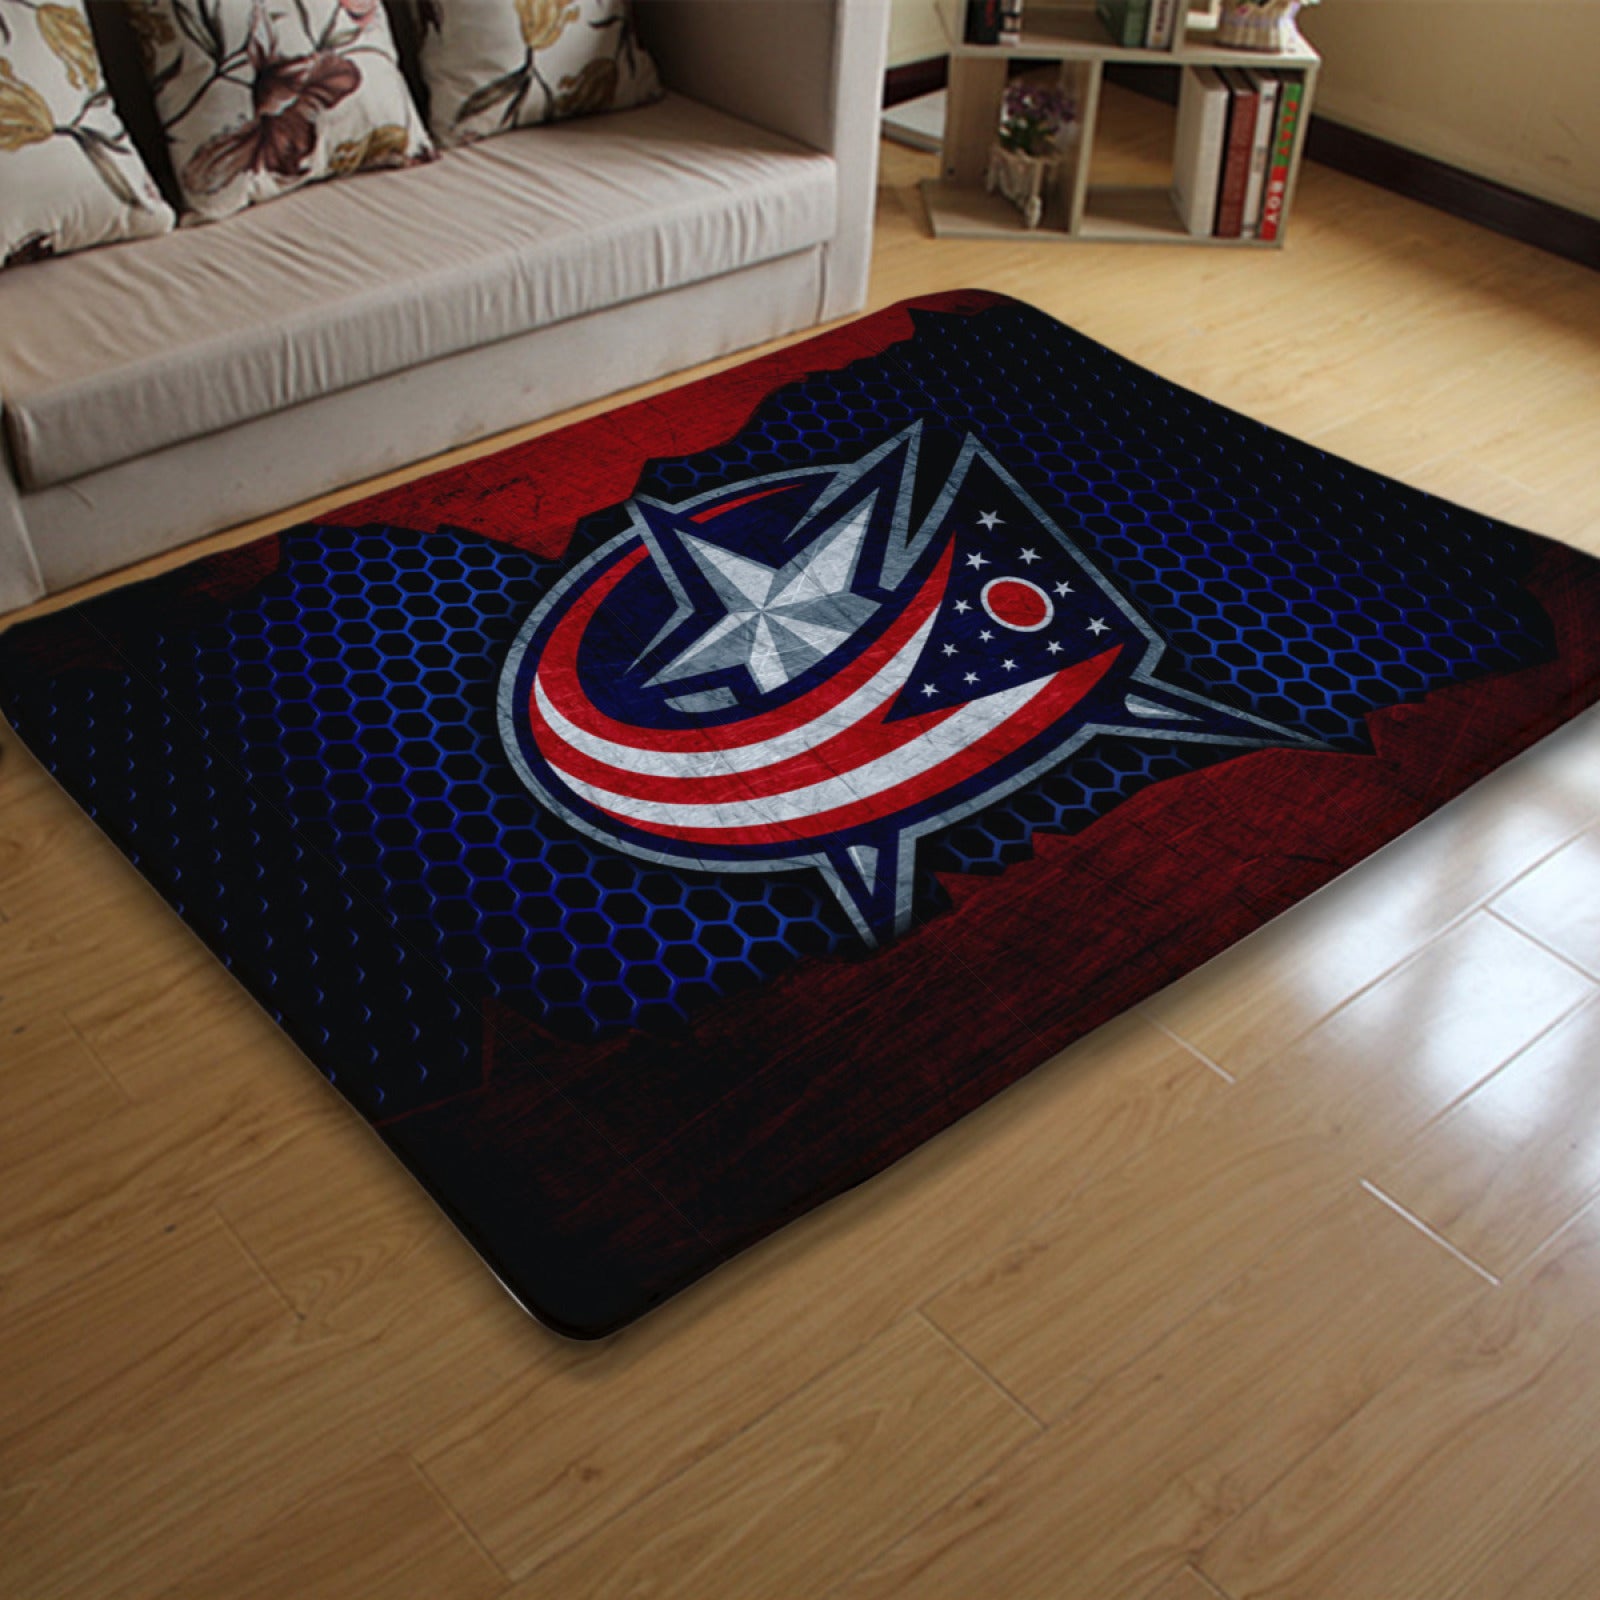 Columbus Blue Jackets Hockey League Carpet Living Room Bedroom Mats Kitchen Bathroom Rugs